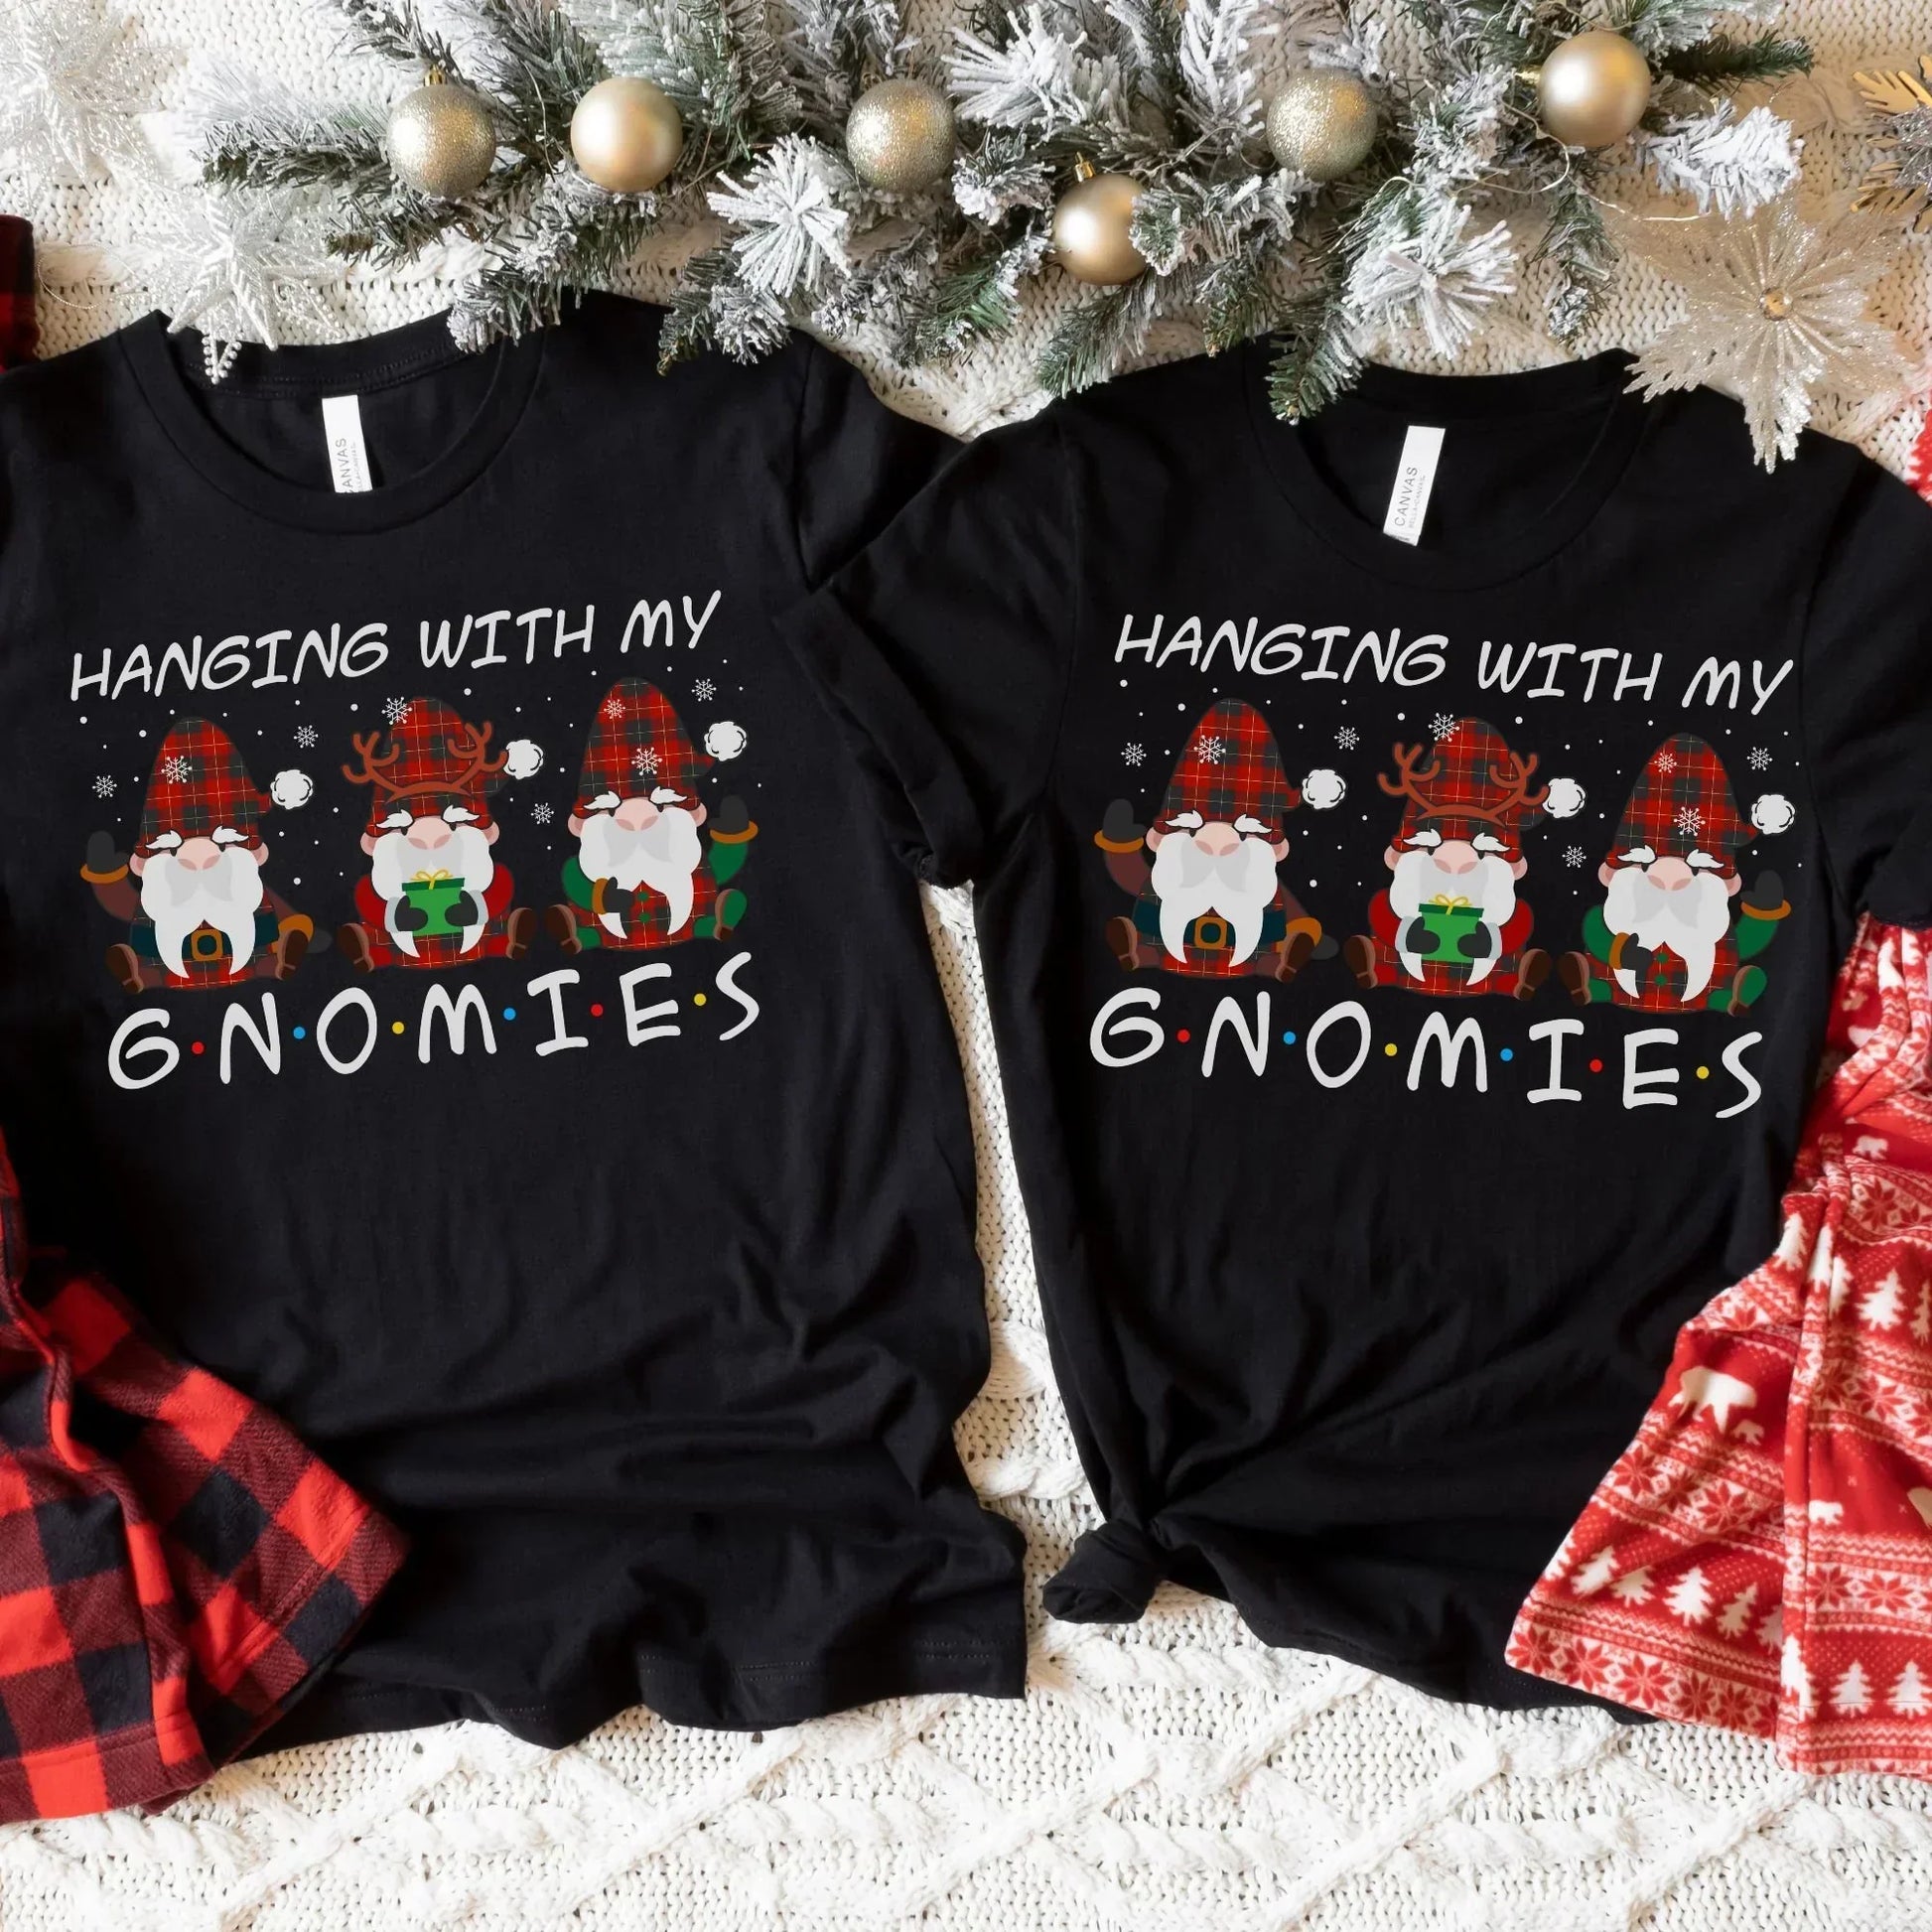 Funny Christmas Sweater, Couples Sweatshirt, Christmas Shirt for Her, Christmas Gift for Him, Merry Xmas Hoodie, Hanging with my Gnomies HMDesignStudioUS